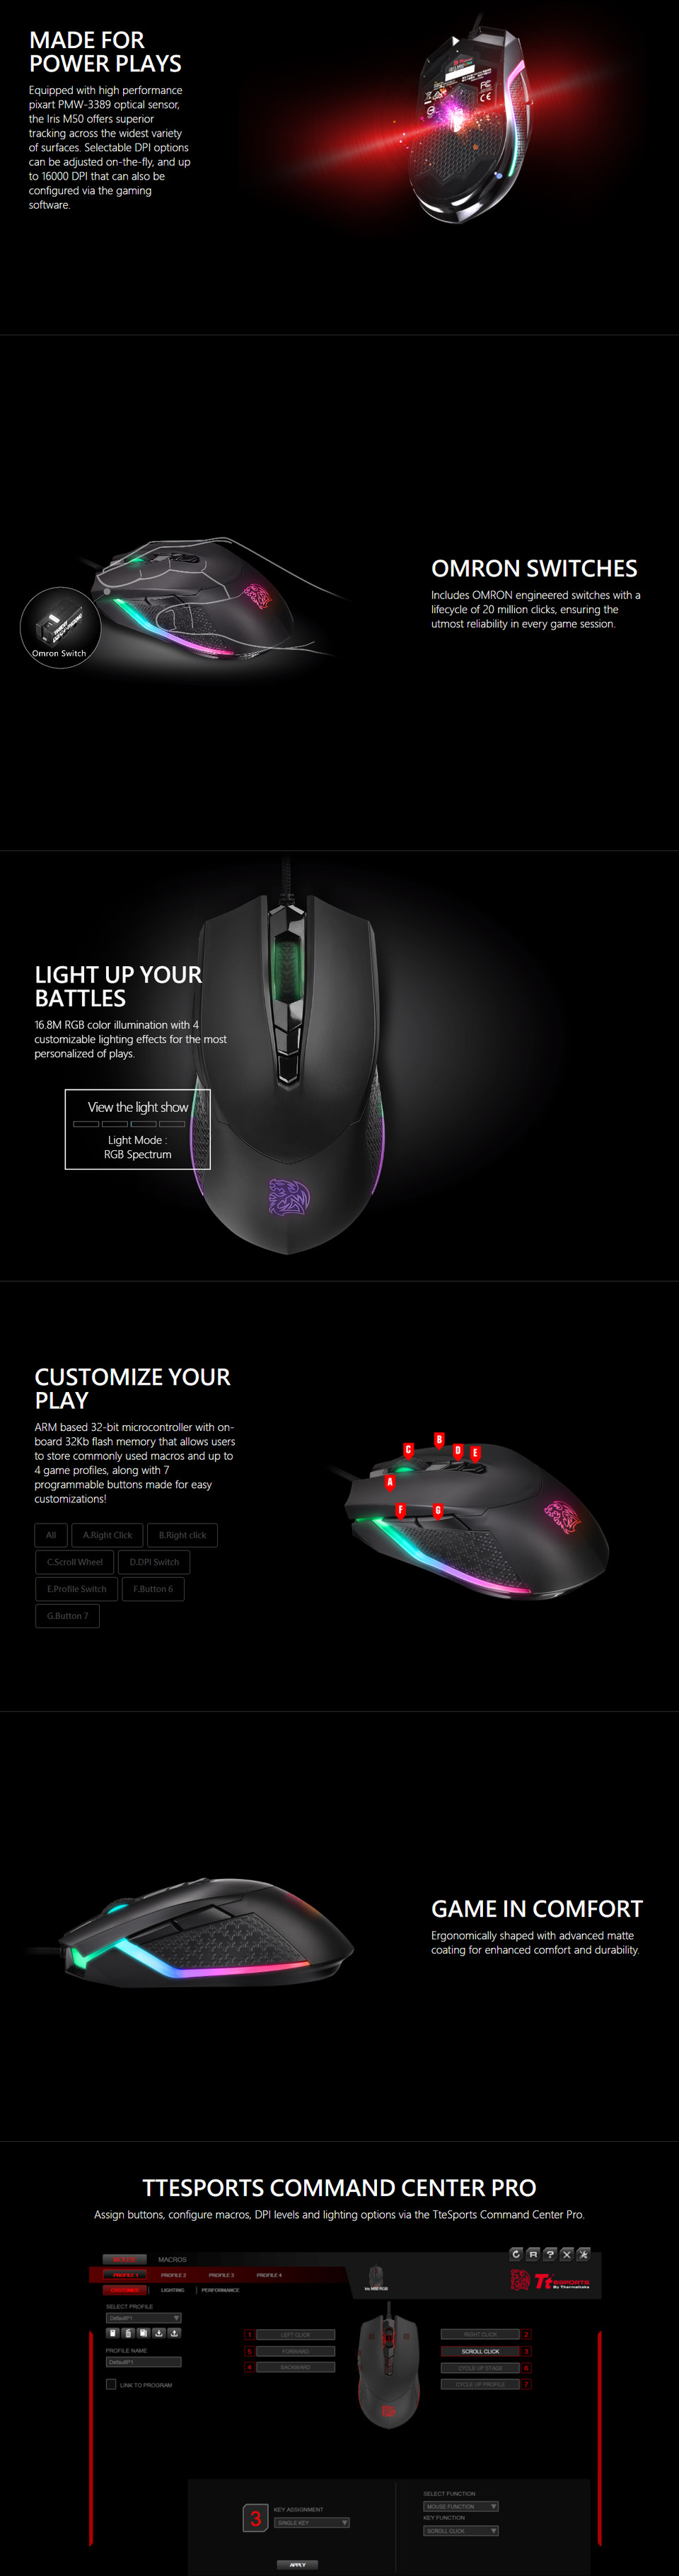 thermaltake emo-imf-wdoobk-01 wired tt esports iris m50 rgb optical gaming mouse